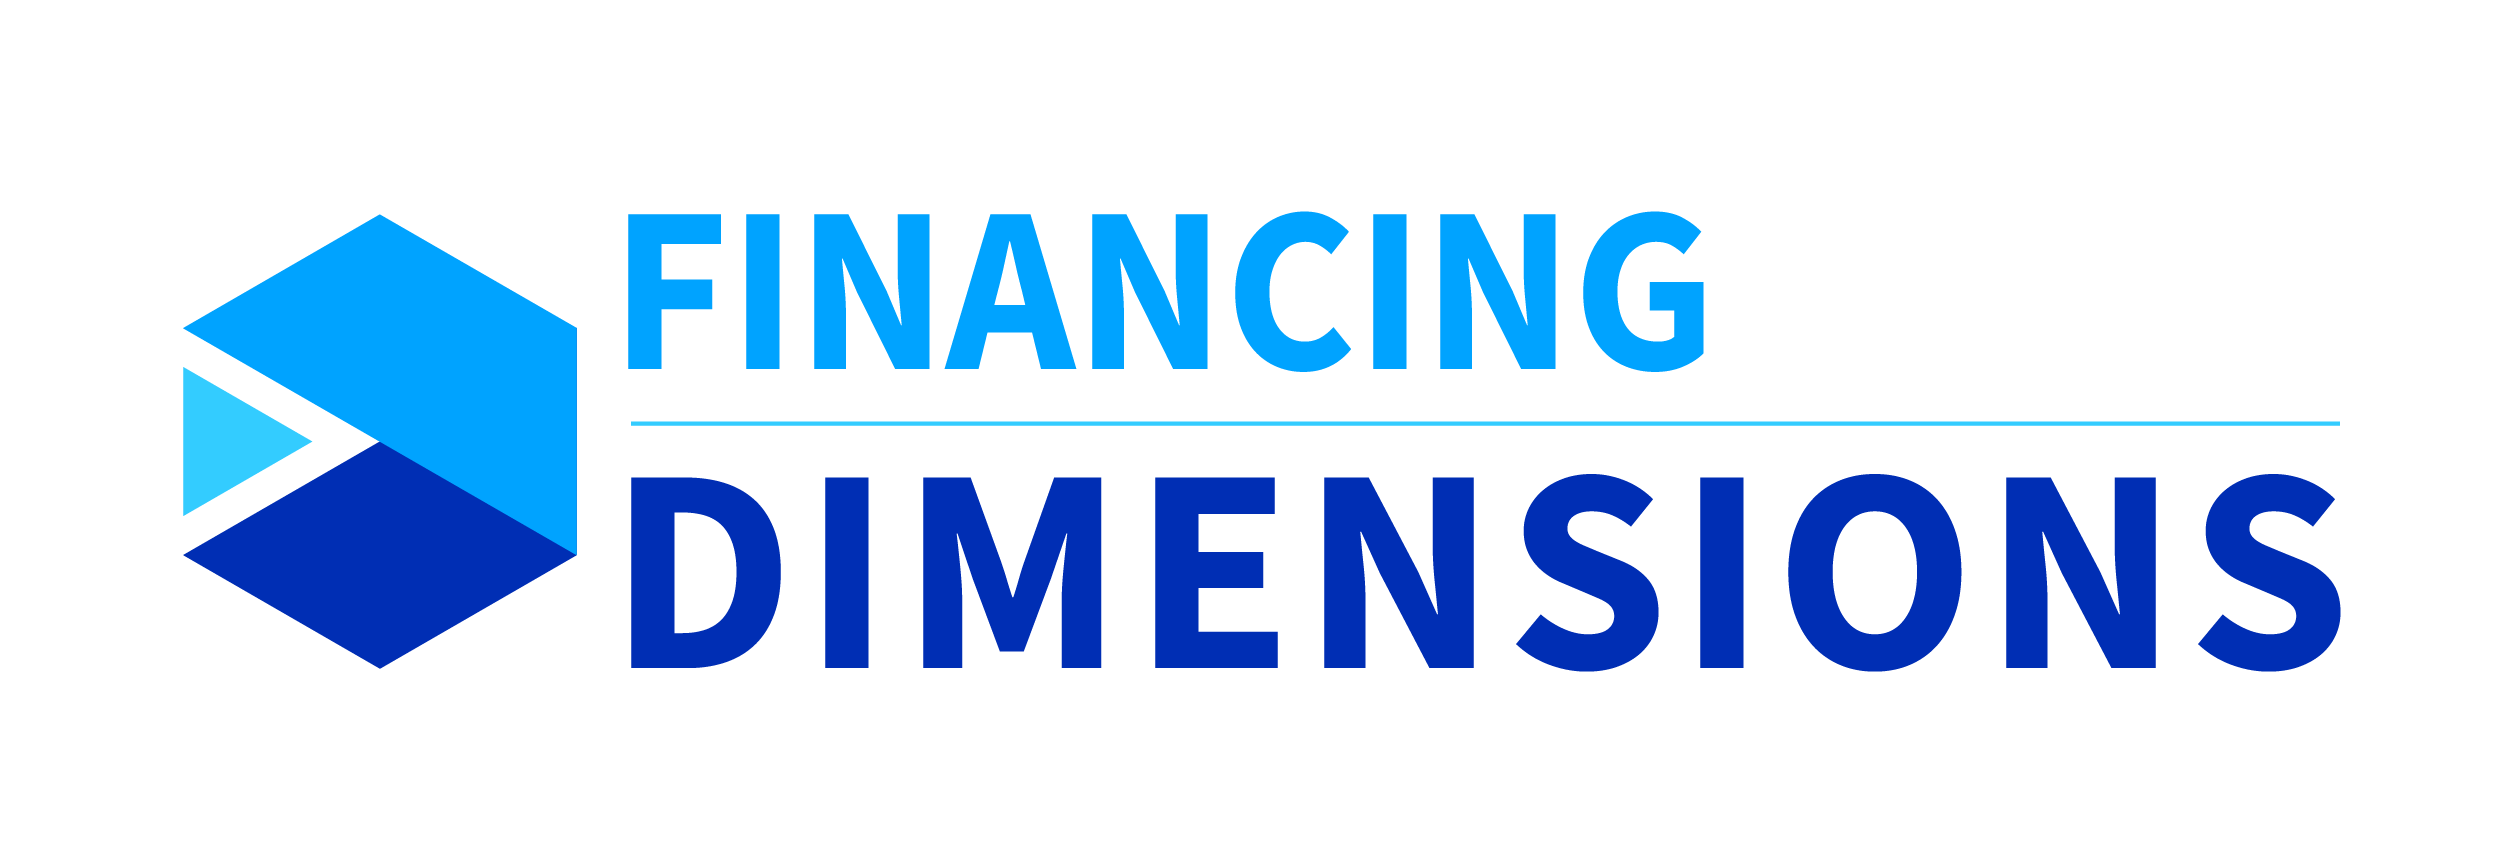 Financing Dimensions